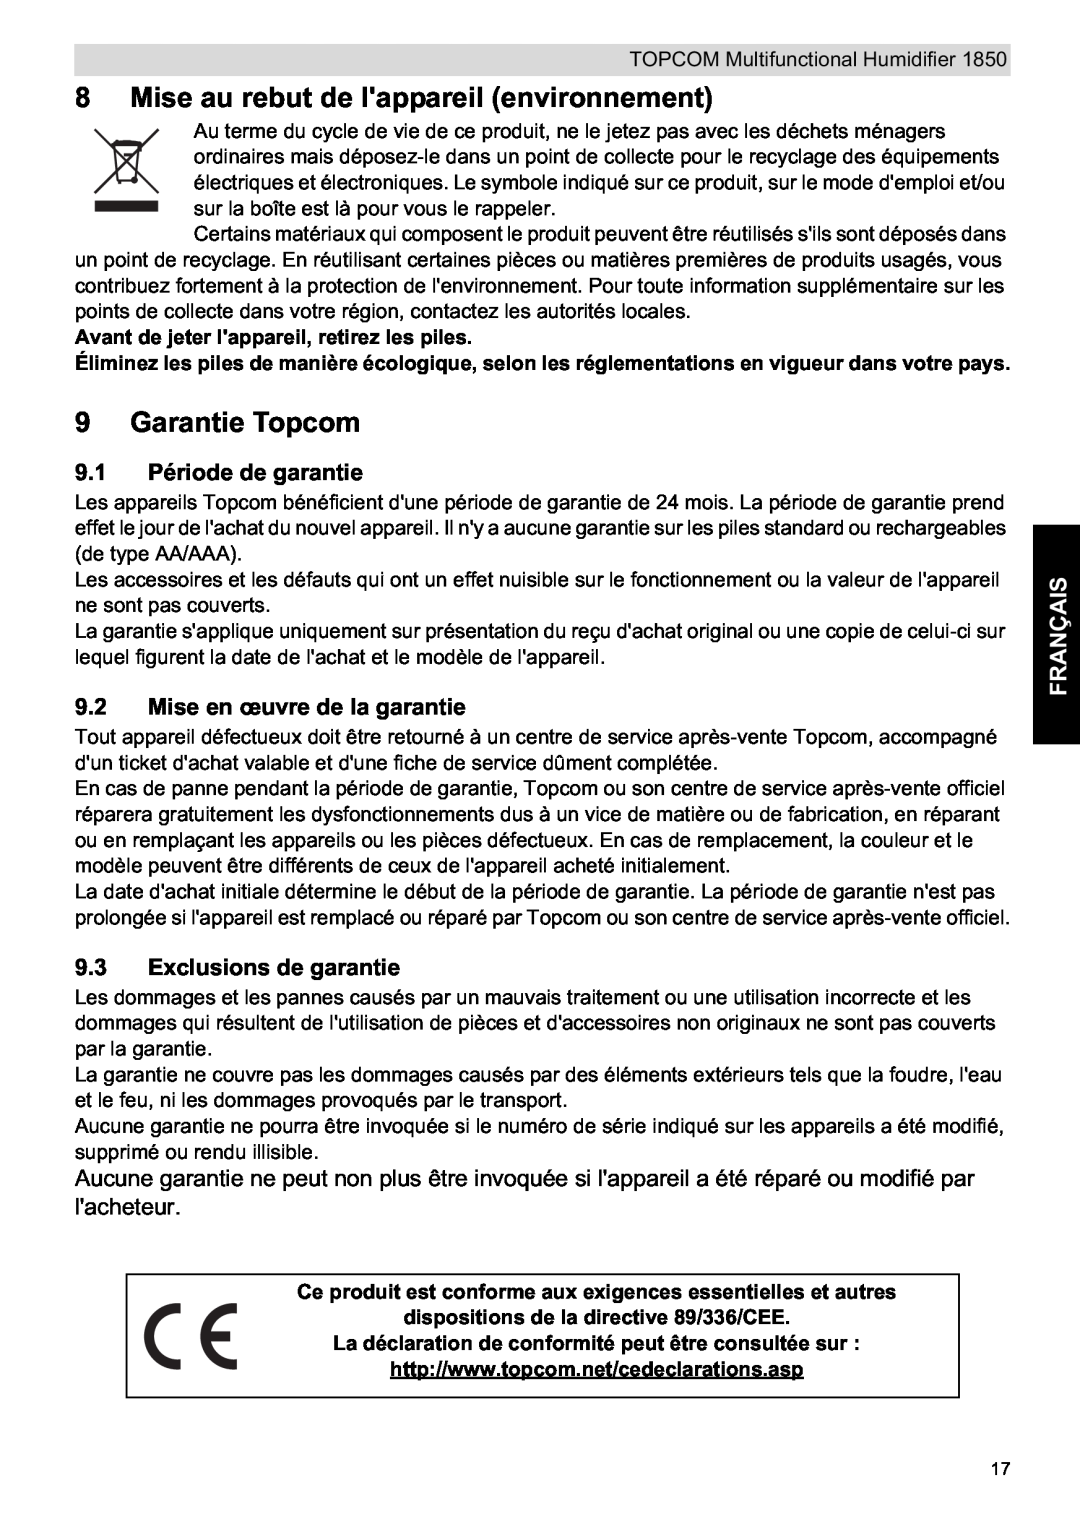 Topcom 1850 Mise au rebut de lappareil environnement, Garantie Topcom, 9.1 Période de garantie, Exclusions de garantie 